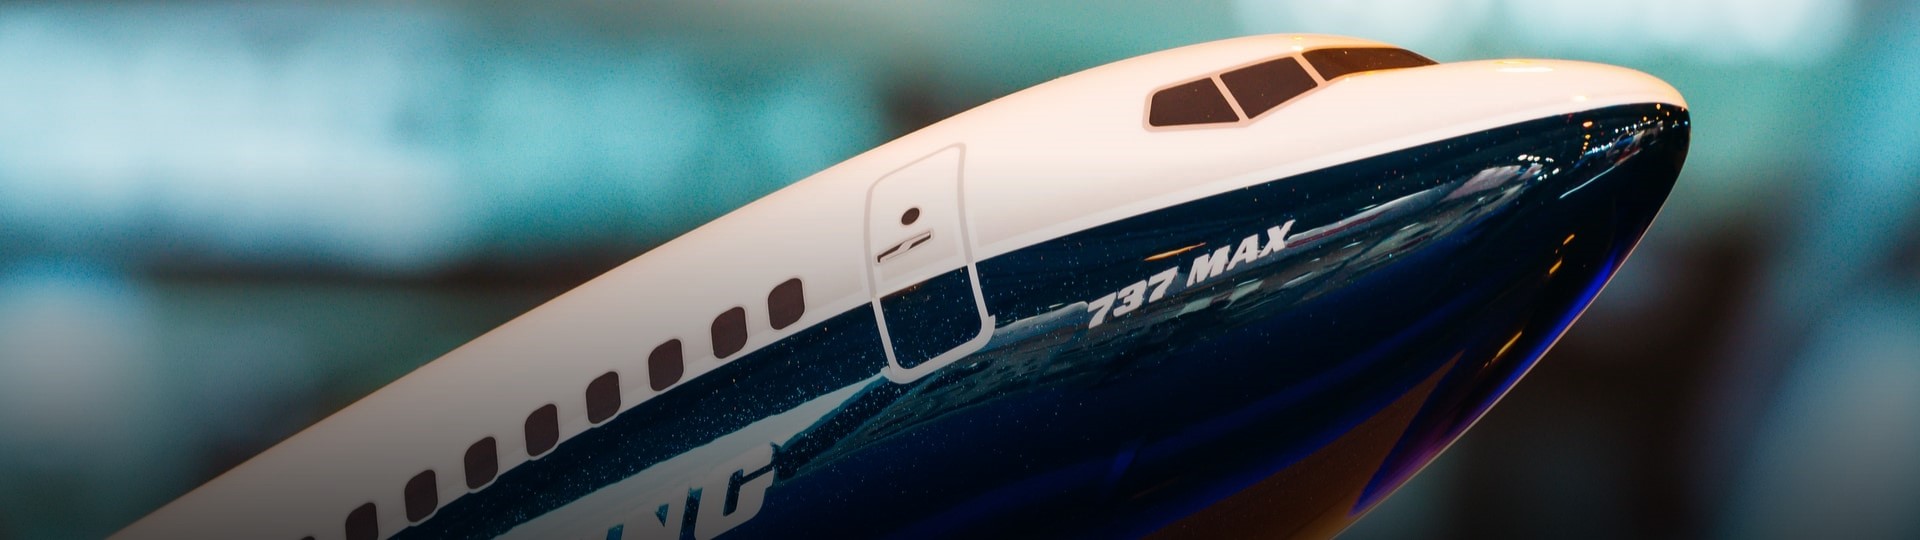 Ryanair si objednal dalších 75 letadel Boeing 737 MAX